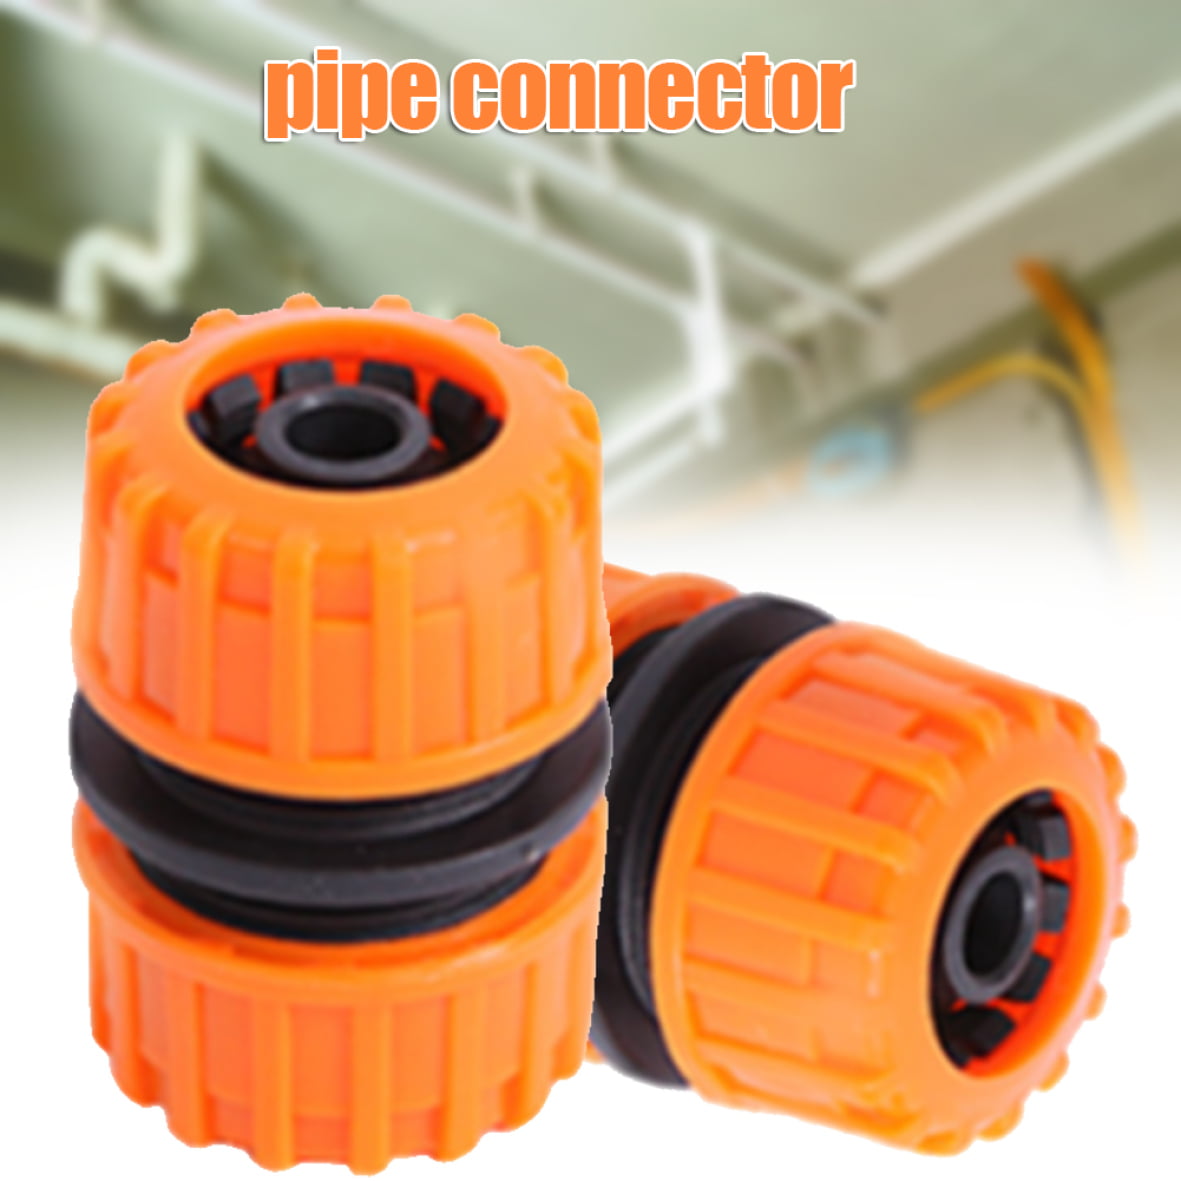 Details about   Hose pipe connector 1/2" garden joiner extender mender adaptor repair 